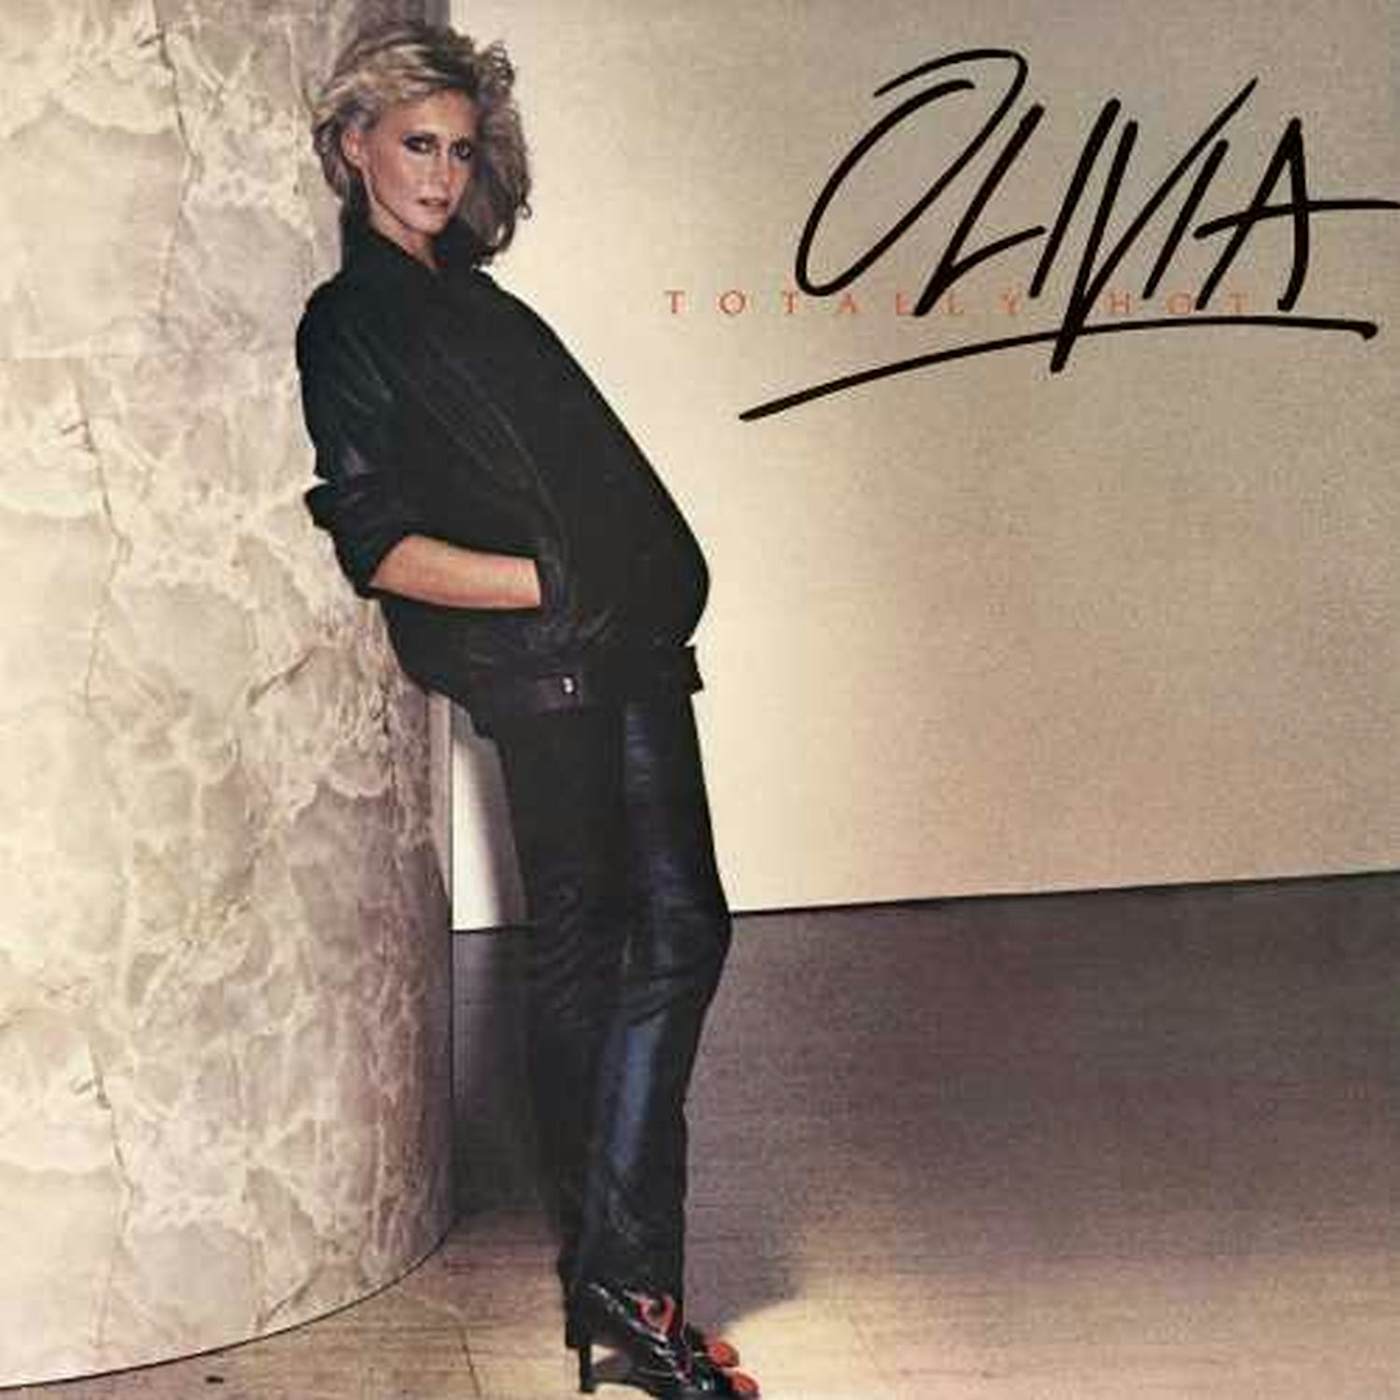 Olivia Newton-John Totally Hot 45th Anniversary LP (Vinyl)